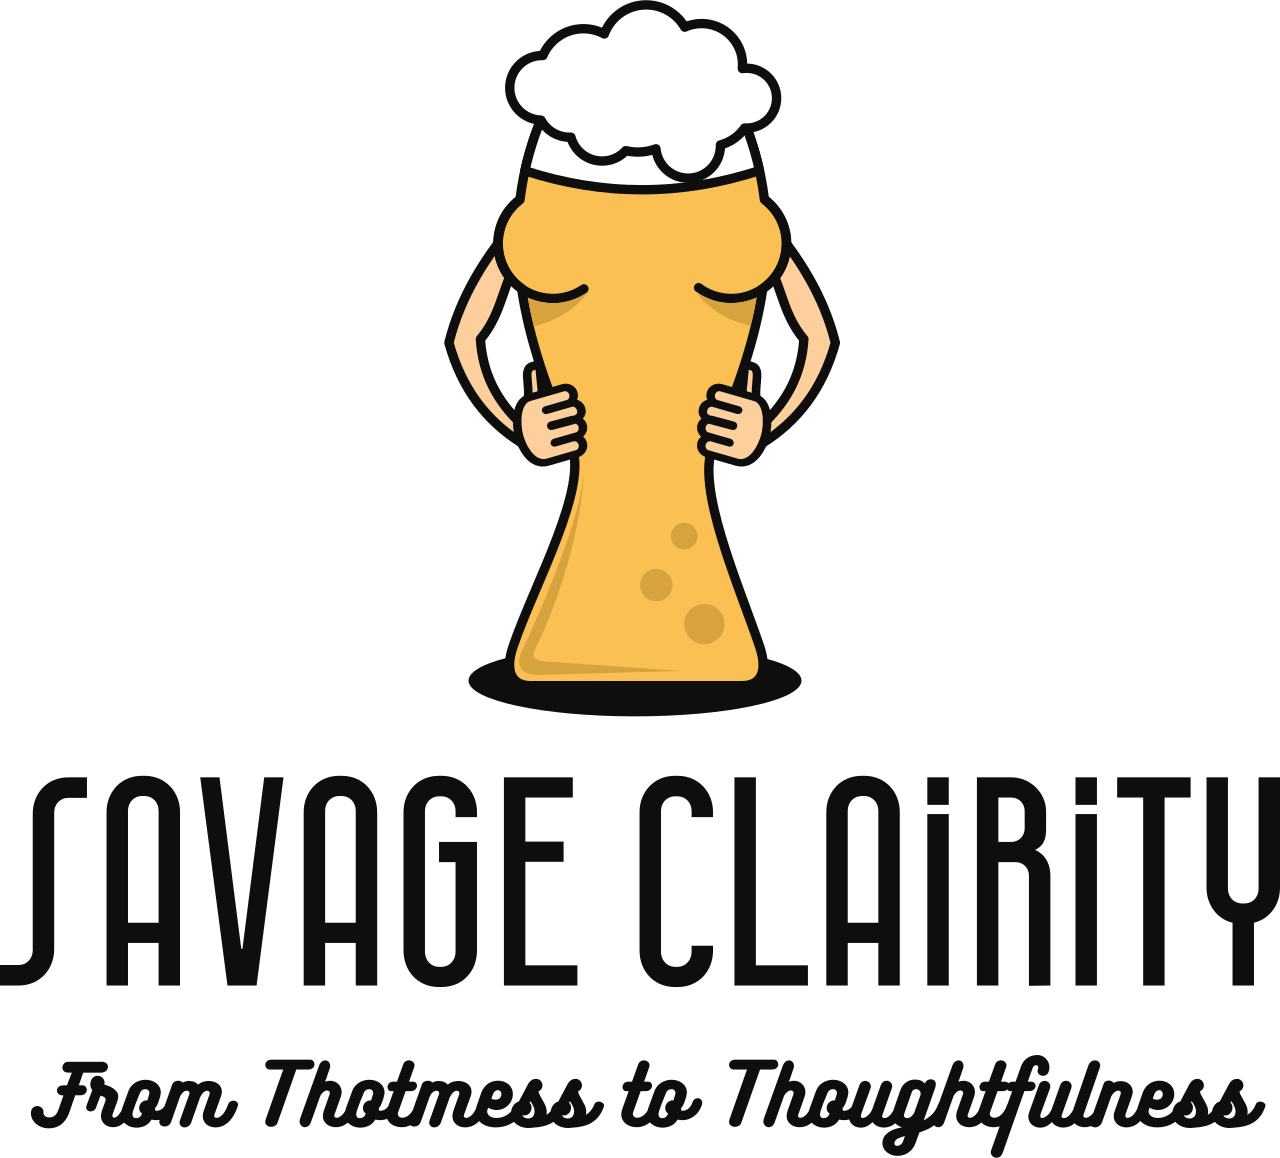 Savage Clairity's logo